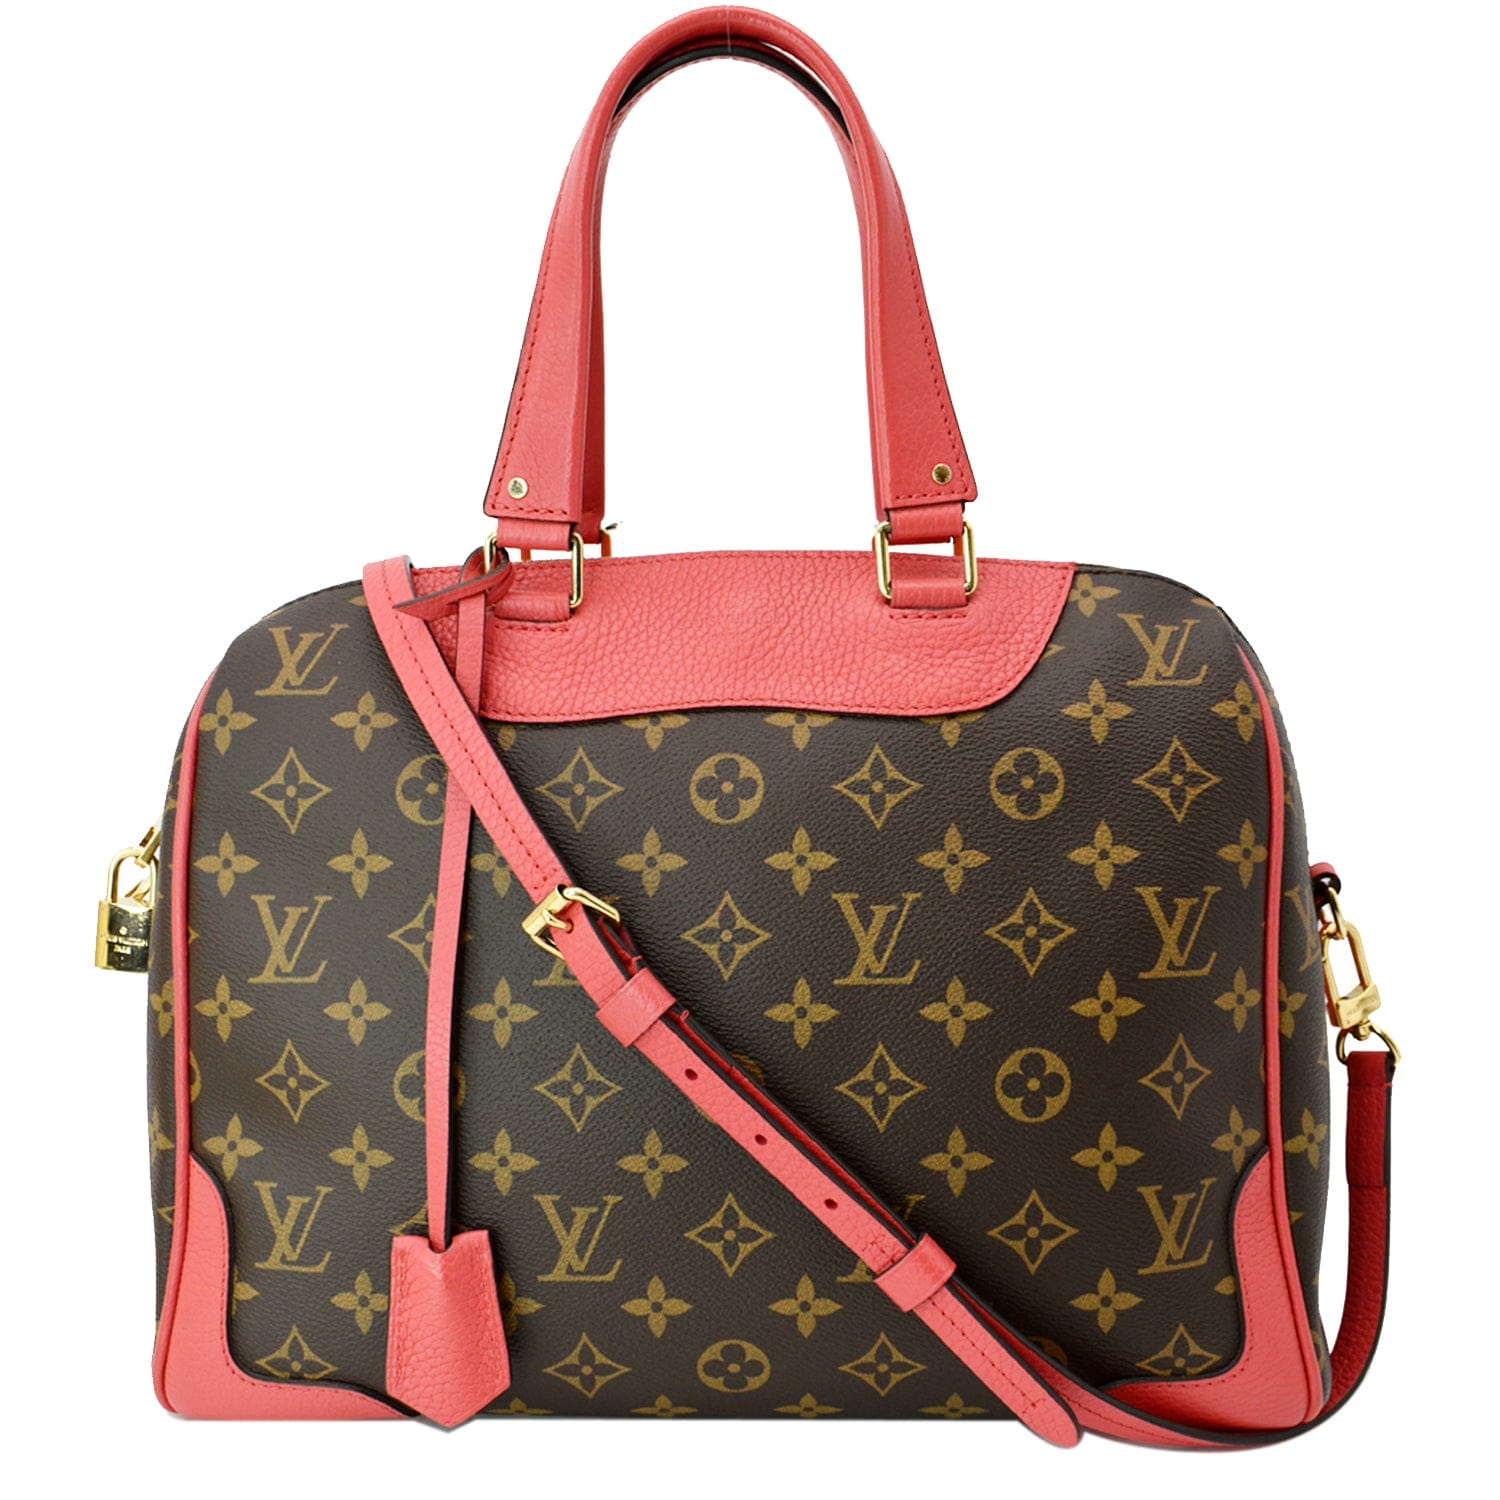 Louis Vuitton Retiro NM Bleu Ciel Bag Review #louisvuitton